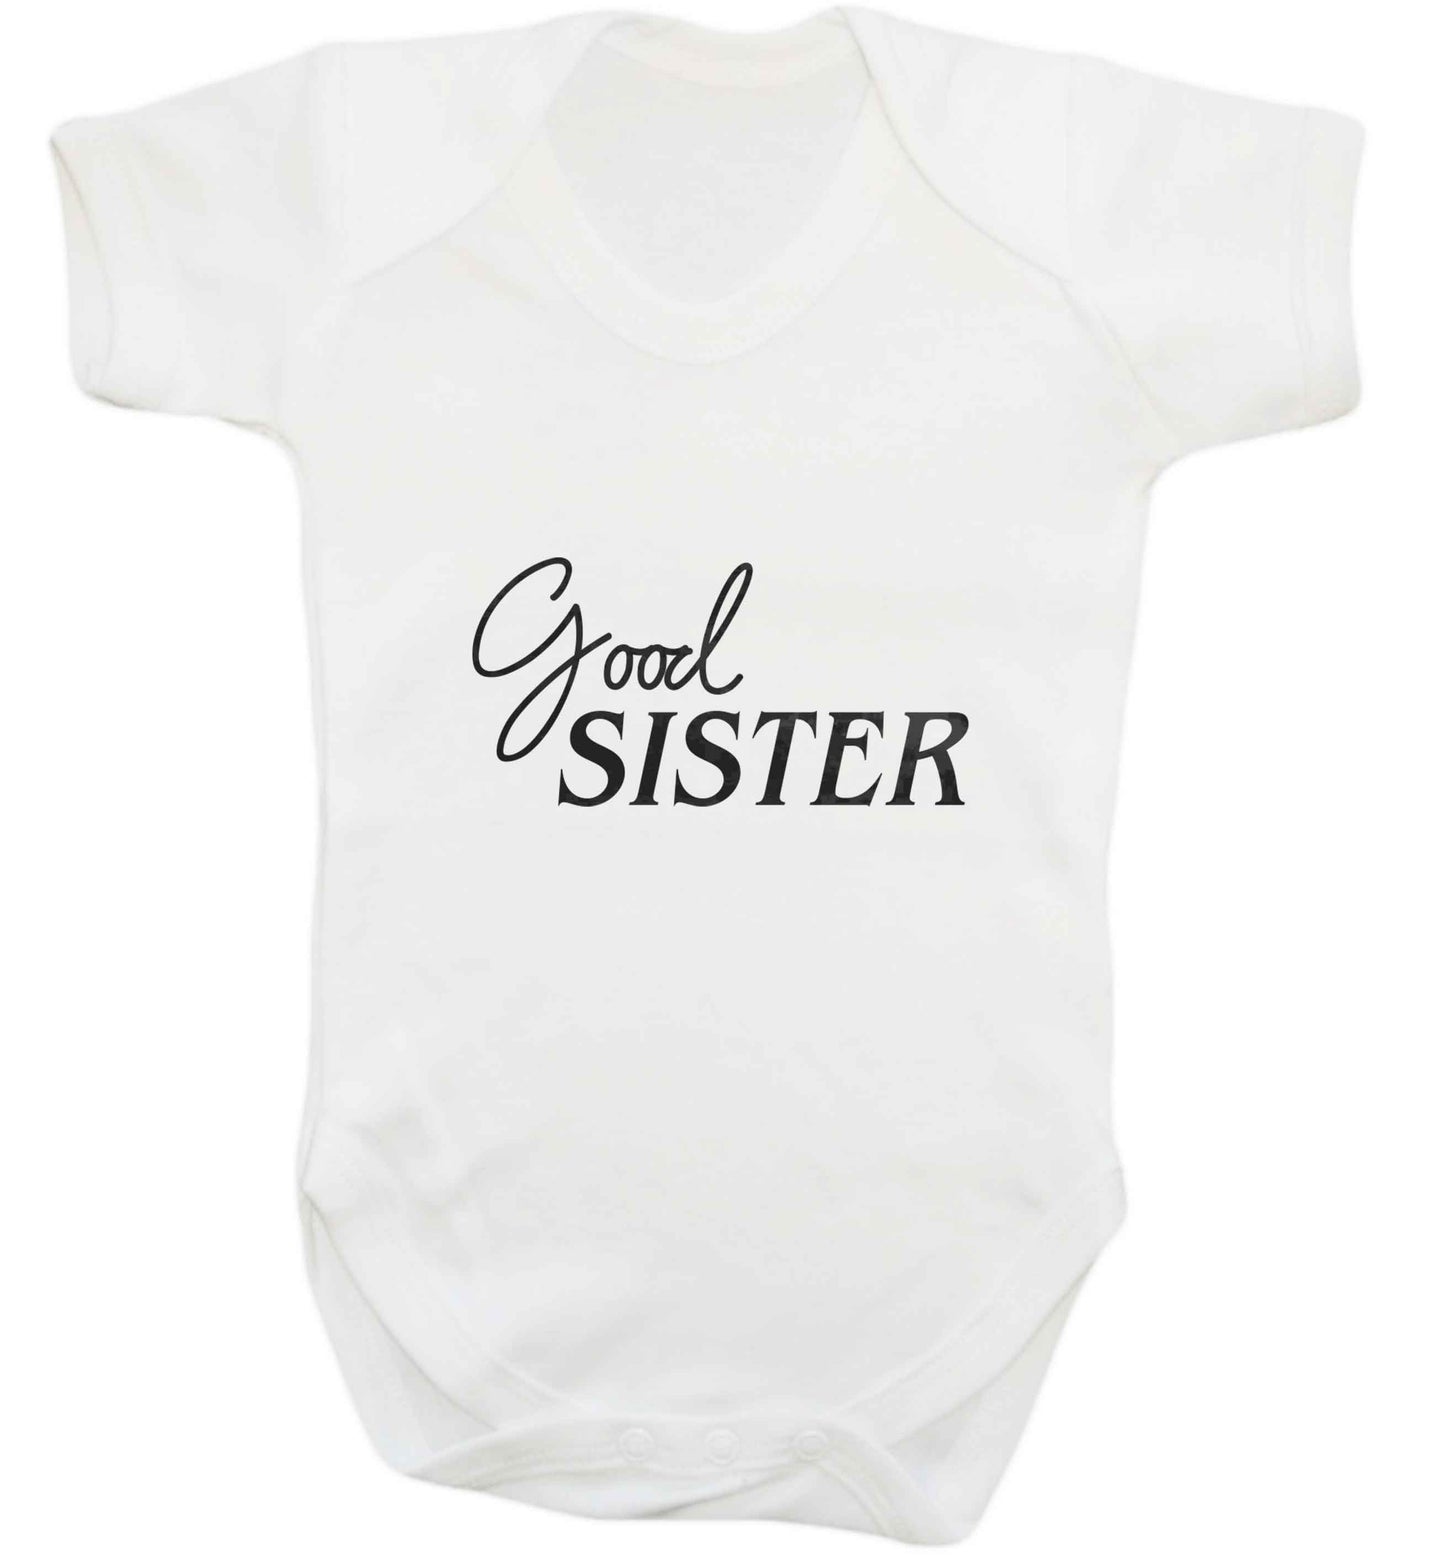 Good sister baby vest white 18-24 months